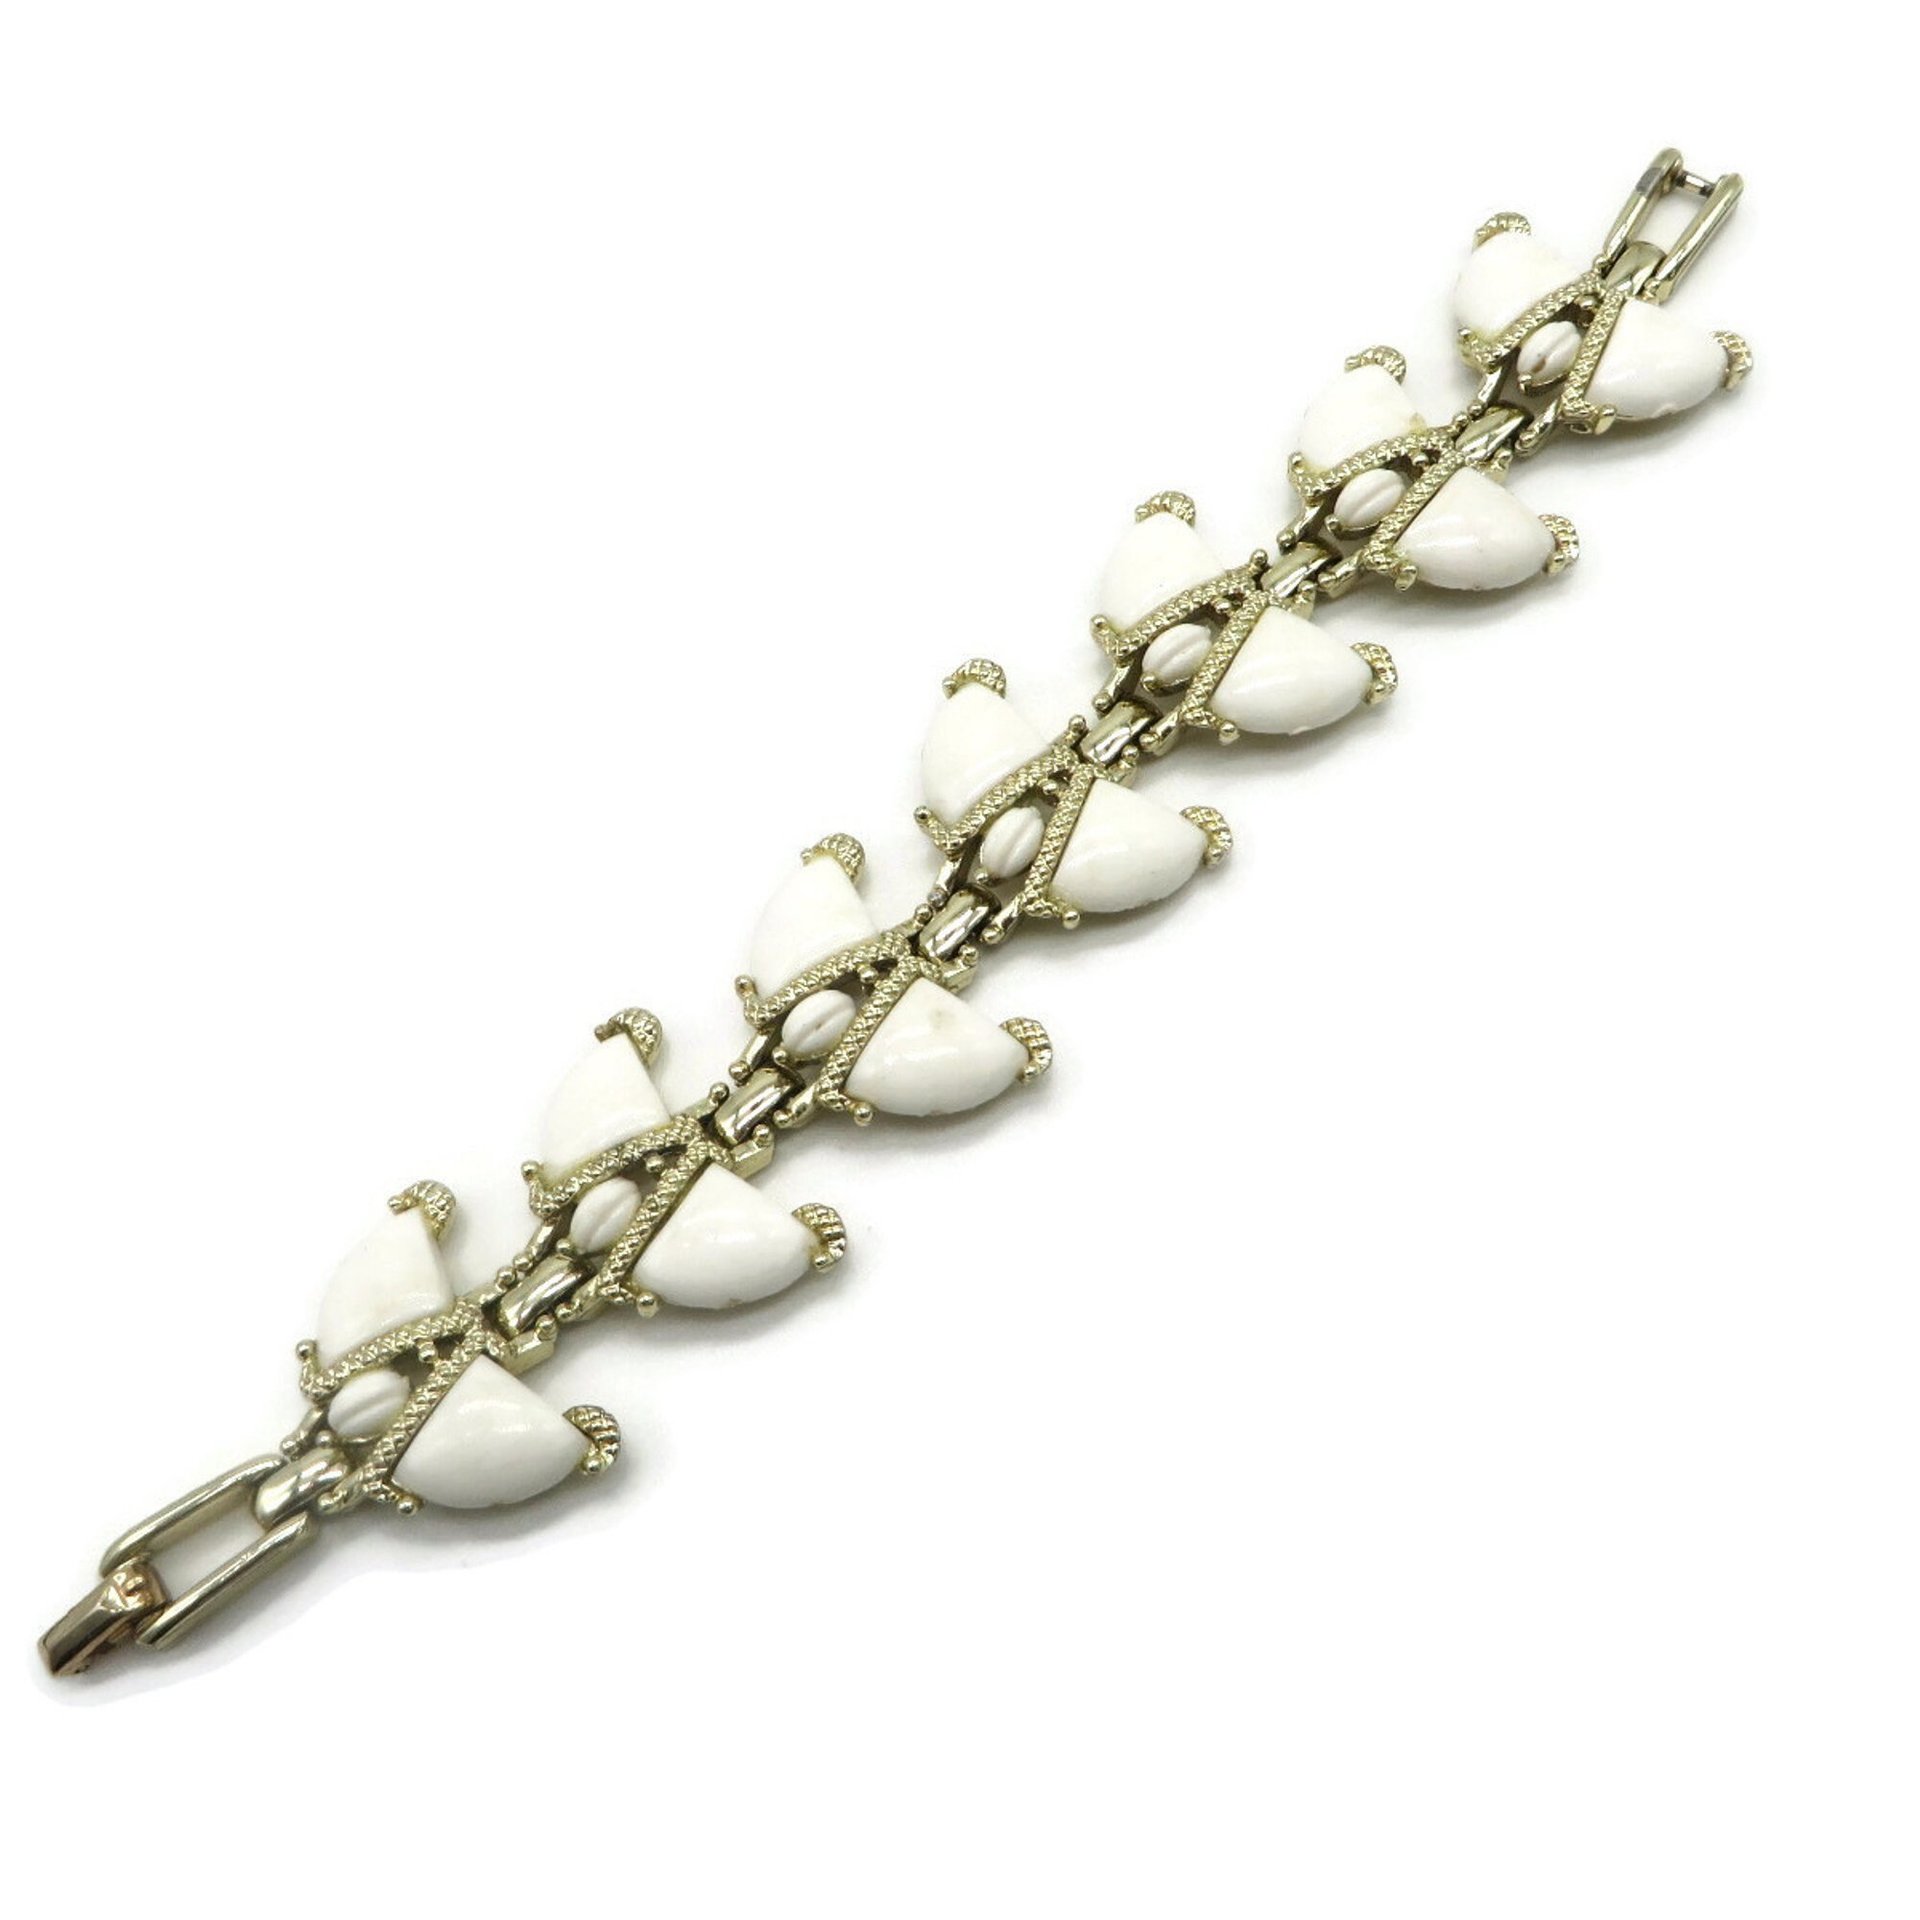 Kramer Bracelet, White Lucite Gold Tone Link Bracelet, Vintage Jewelry